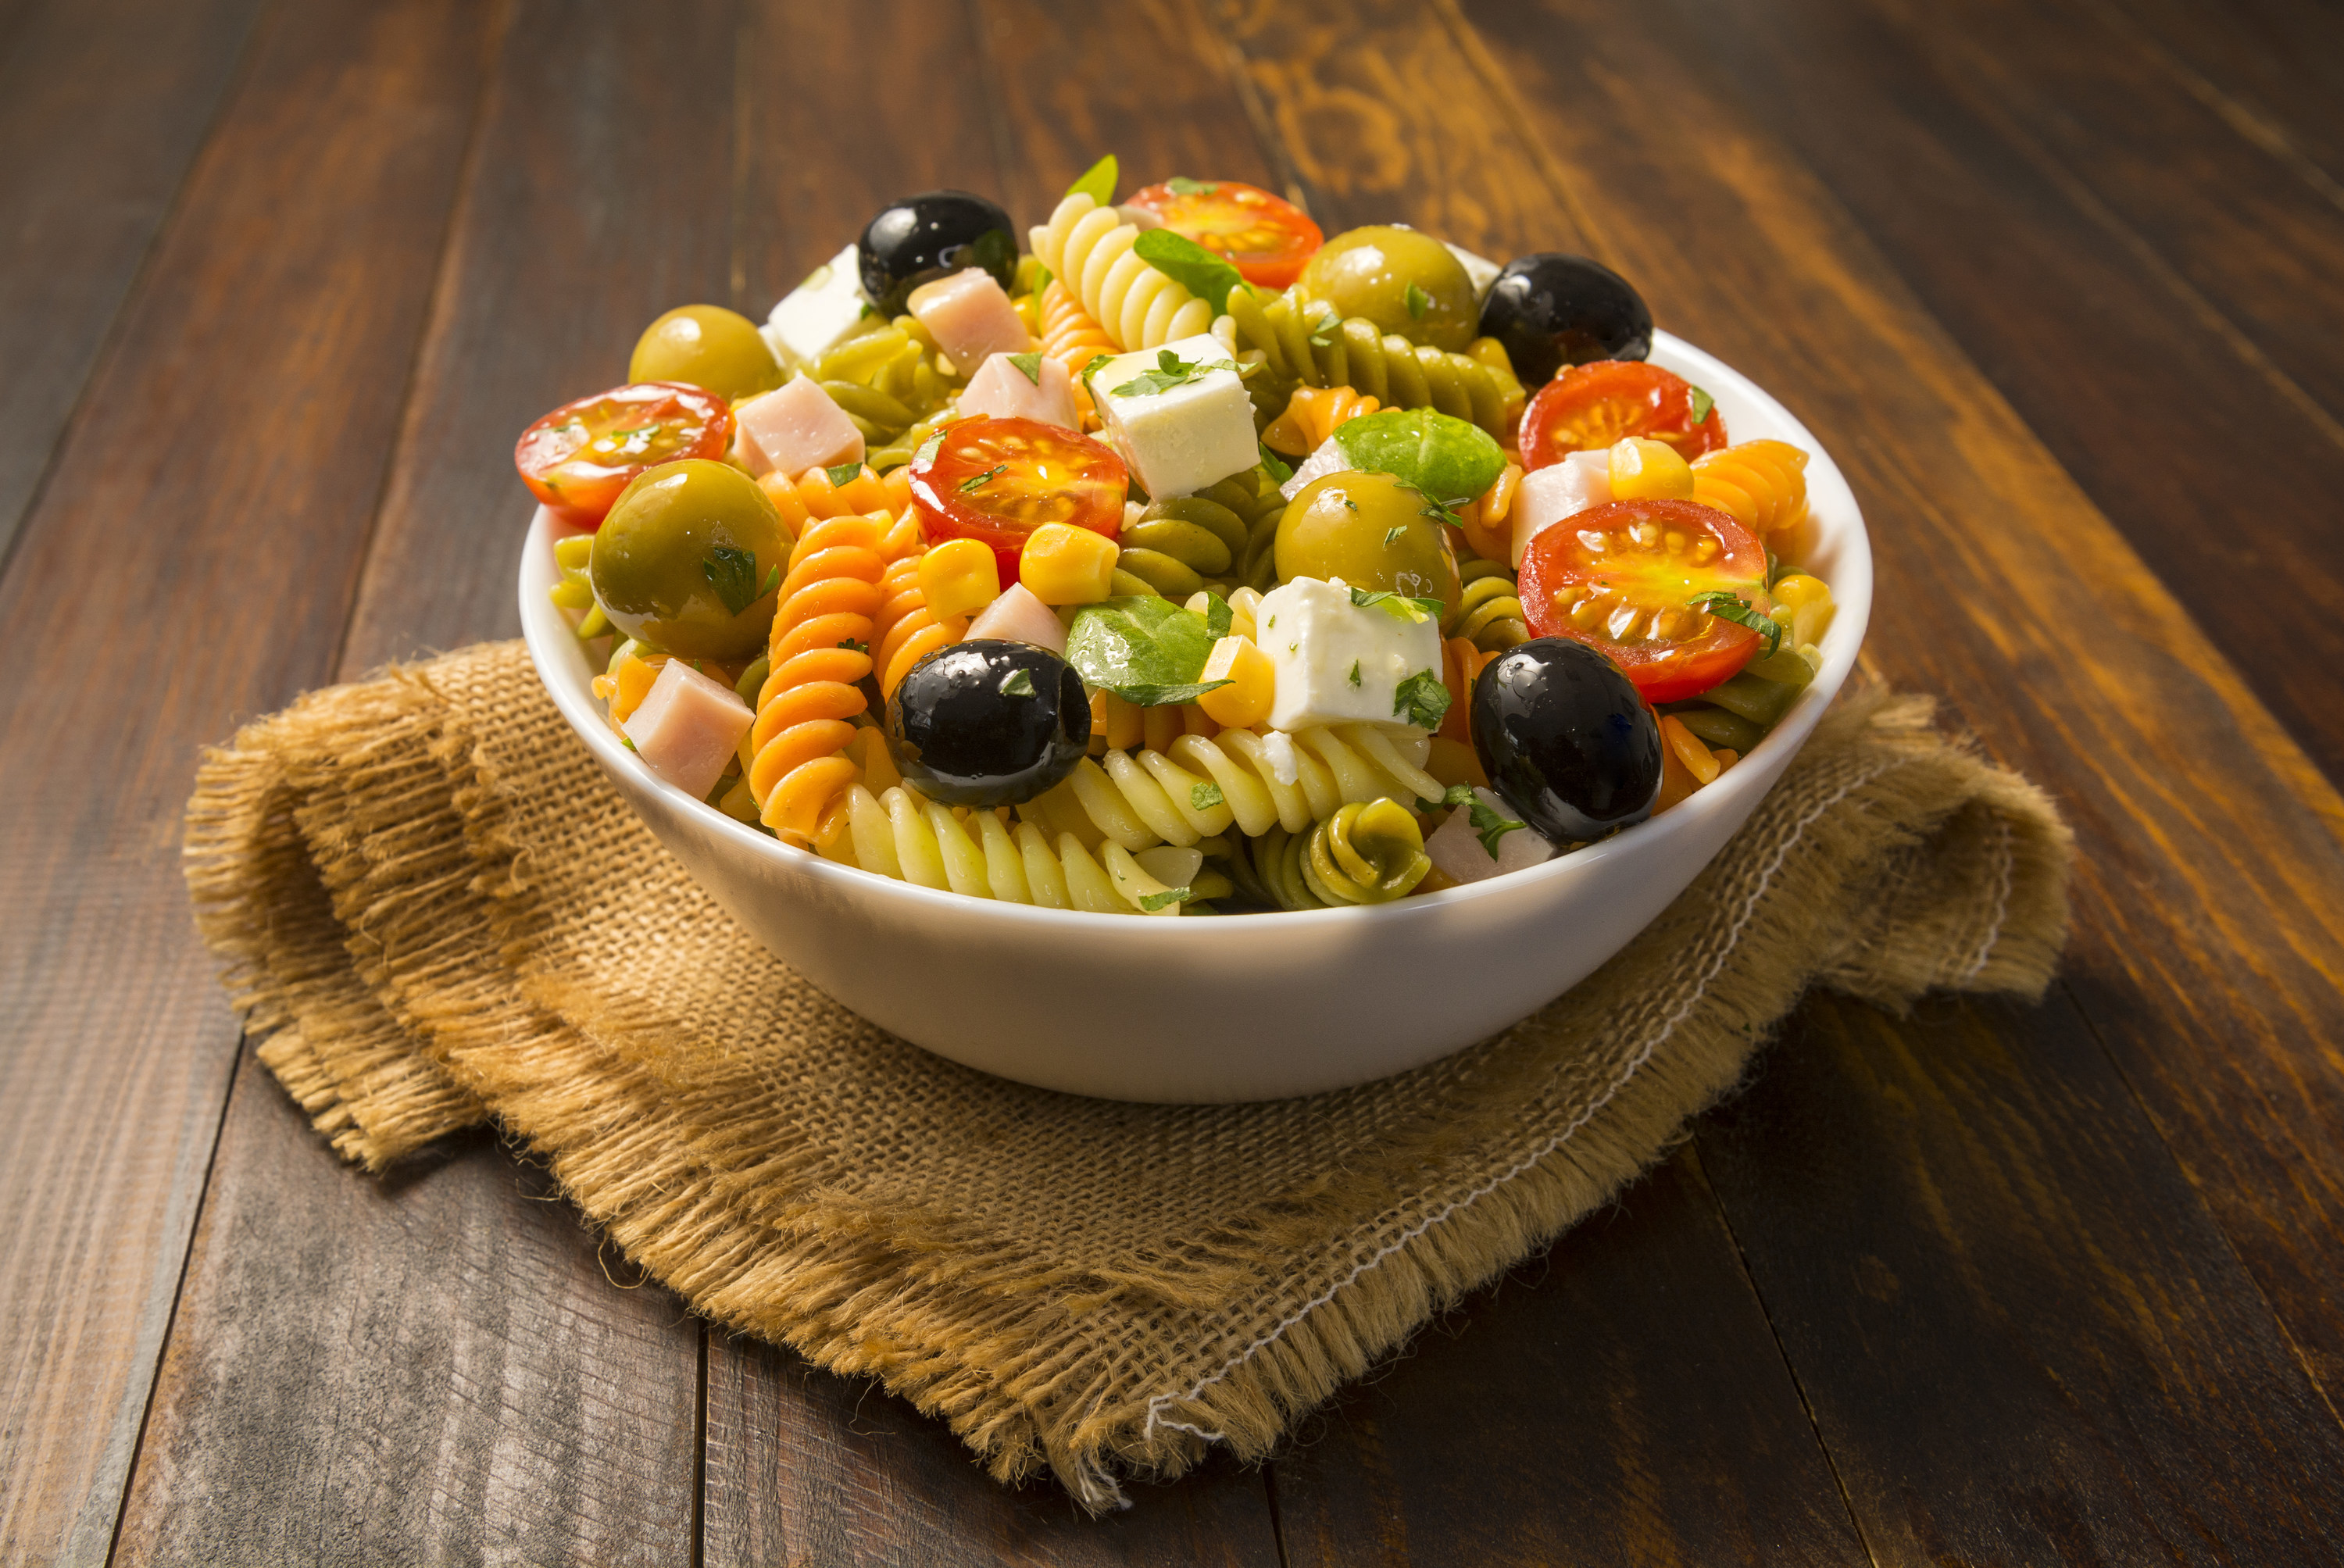 bowl of pasta salad